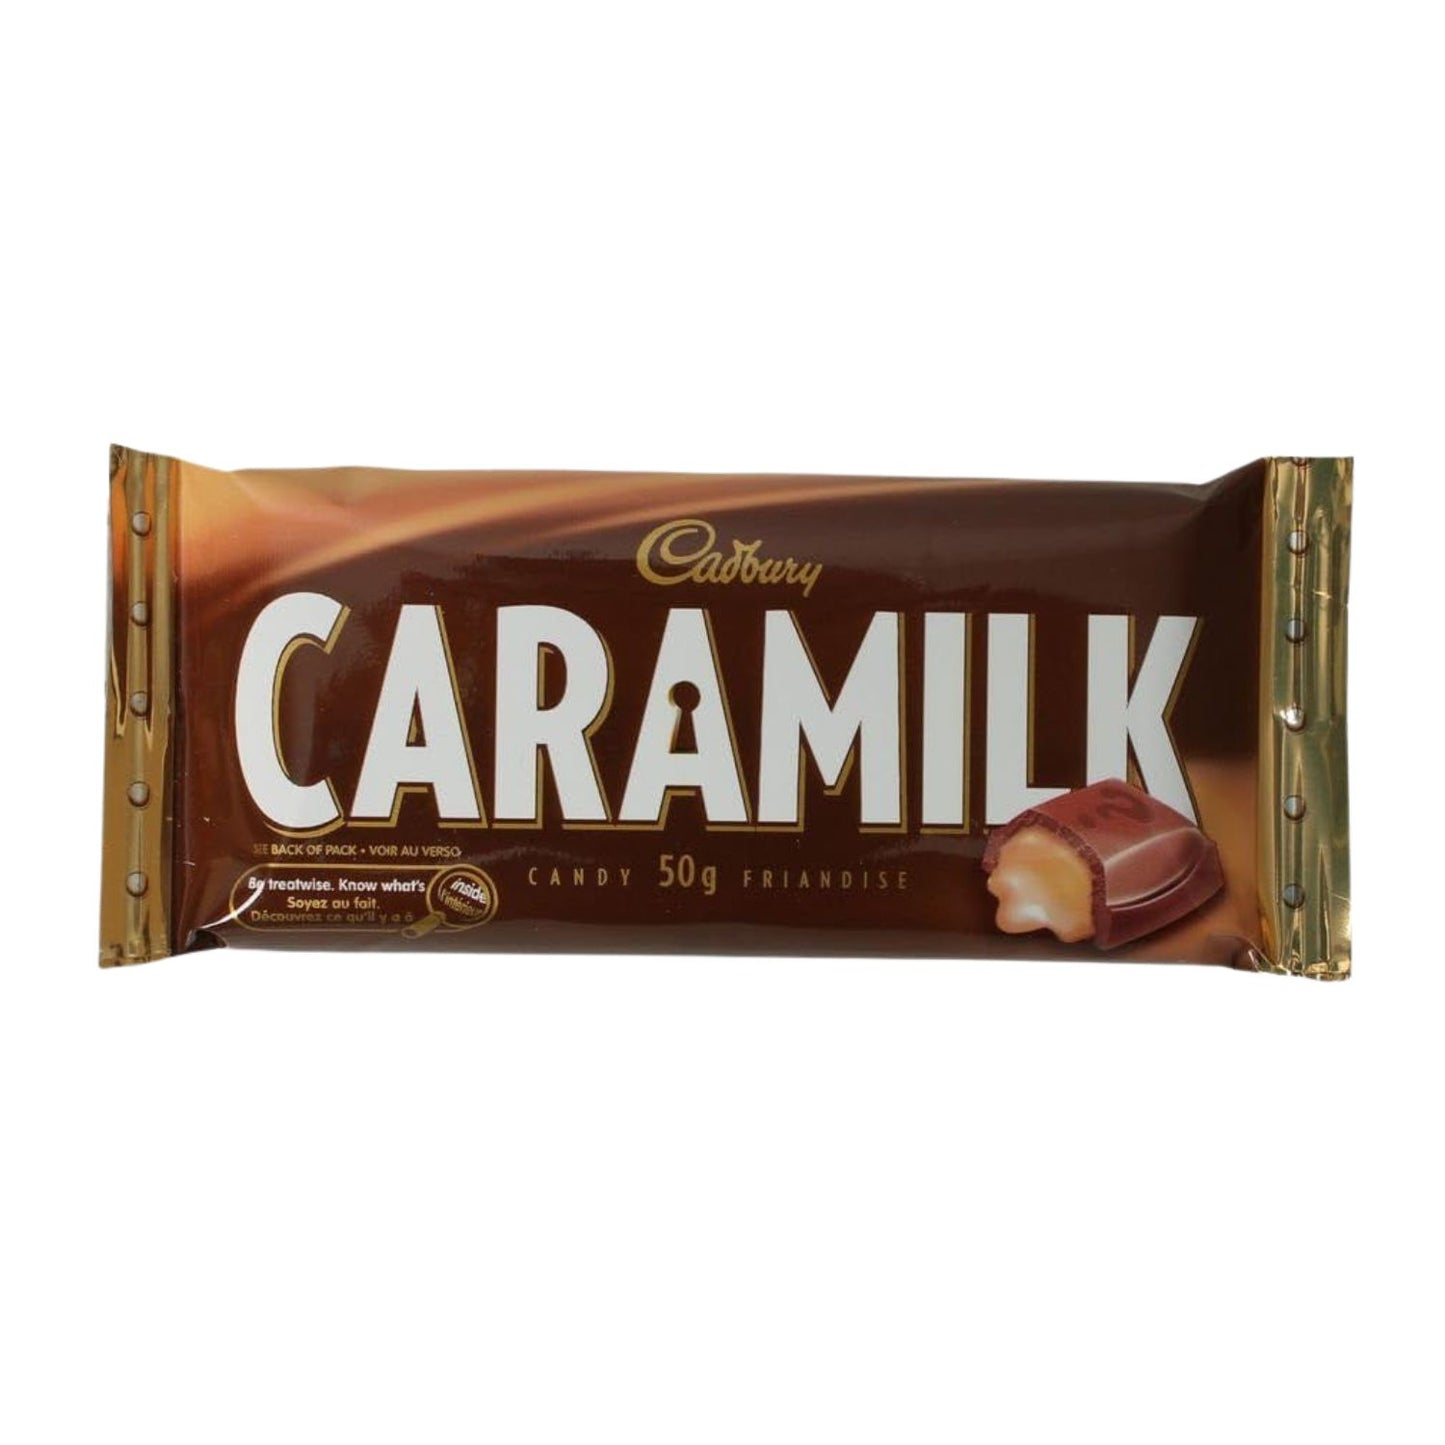 Caramilk Chocolate Bar 50g/1.76oz (Shipped from Canada)